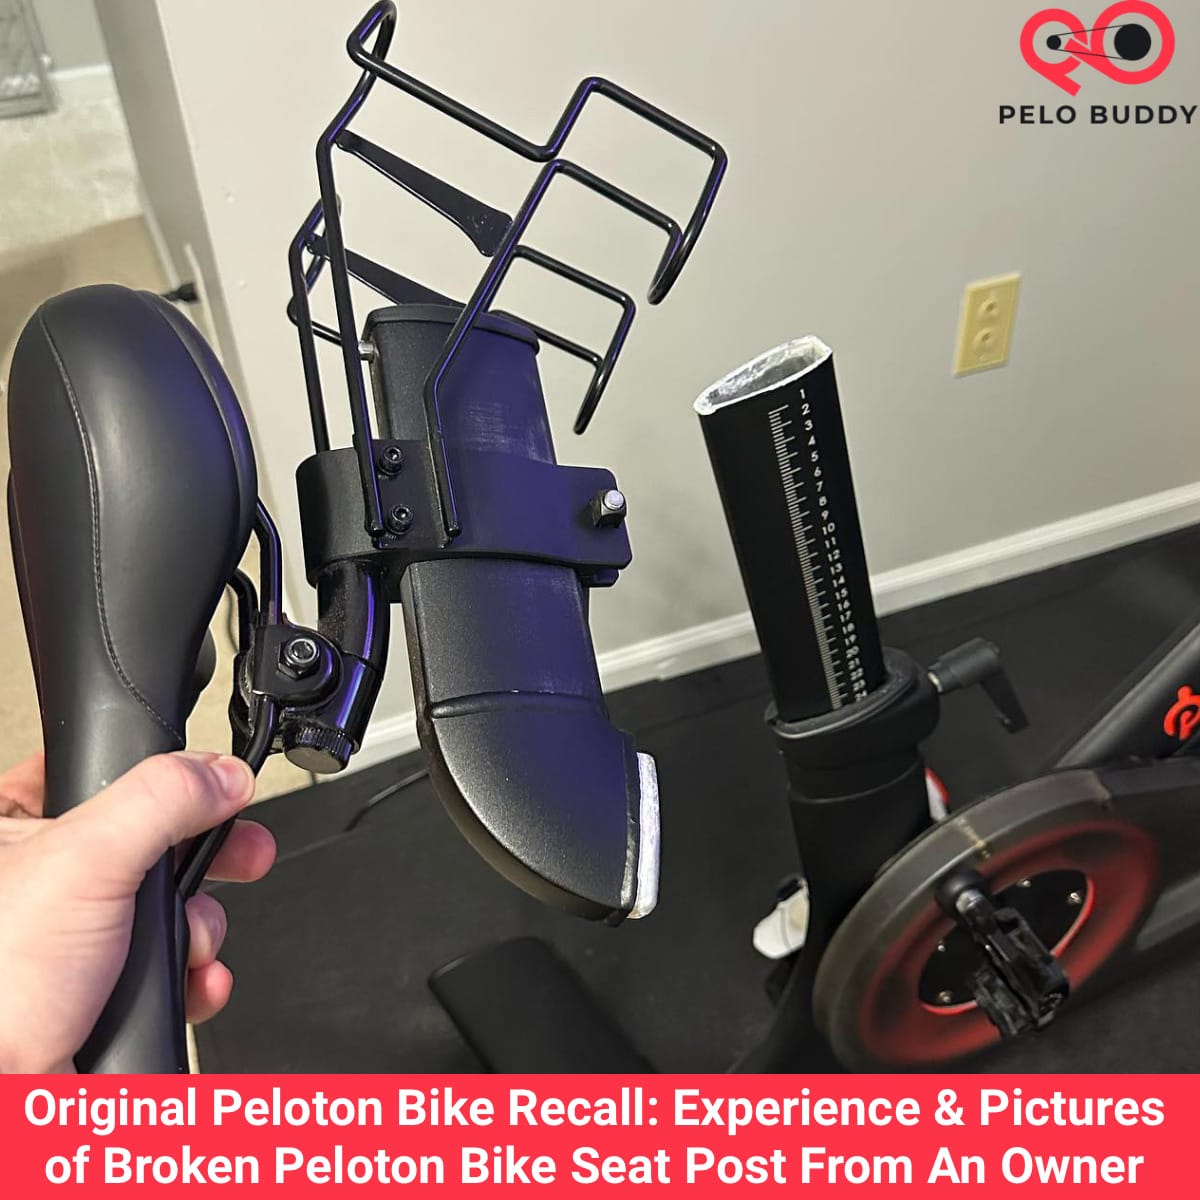 Original Peloton Bike Recall: Experience & Pictures of Broken Peloton Bike  Seat Post From An Owner - Peloton Buddy